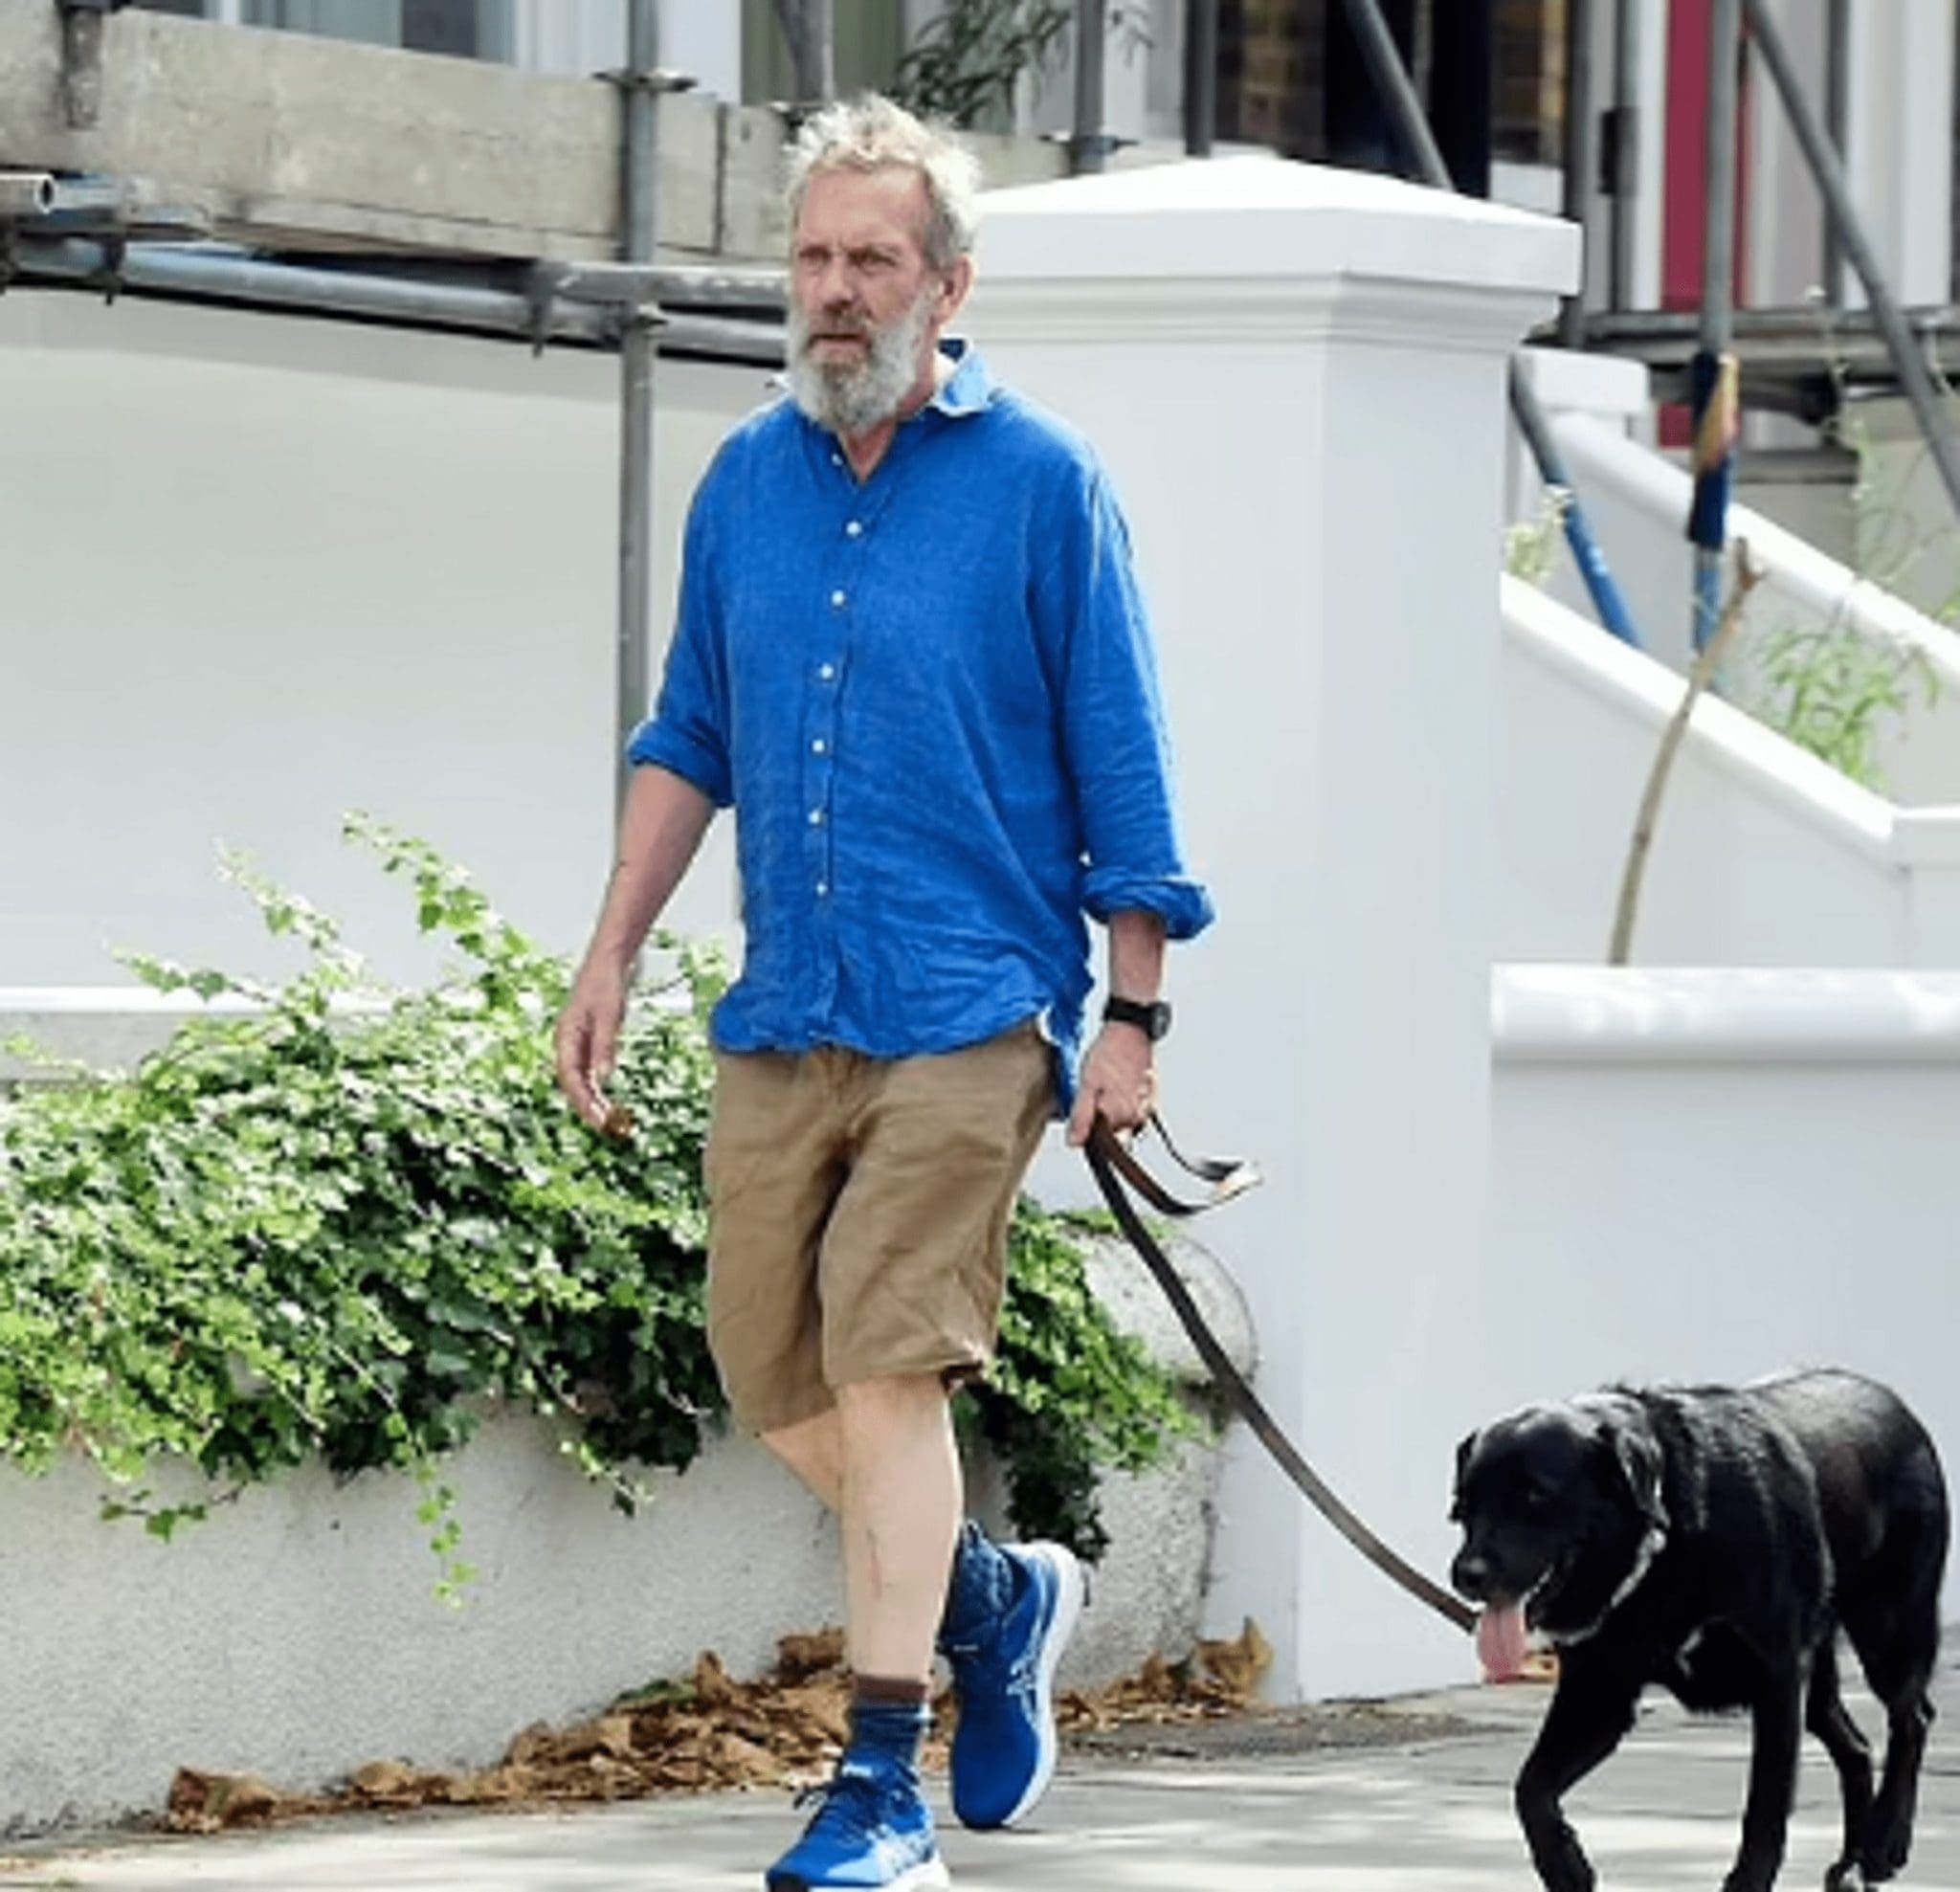 Hugh Laurie, The Star Of House, Walks With Shaggy Beard And Unruly Hair